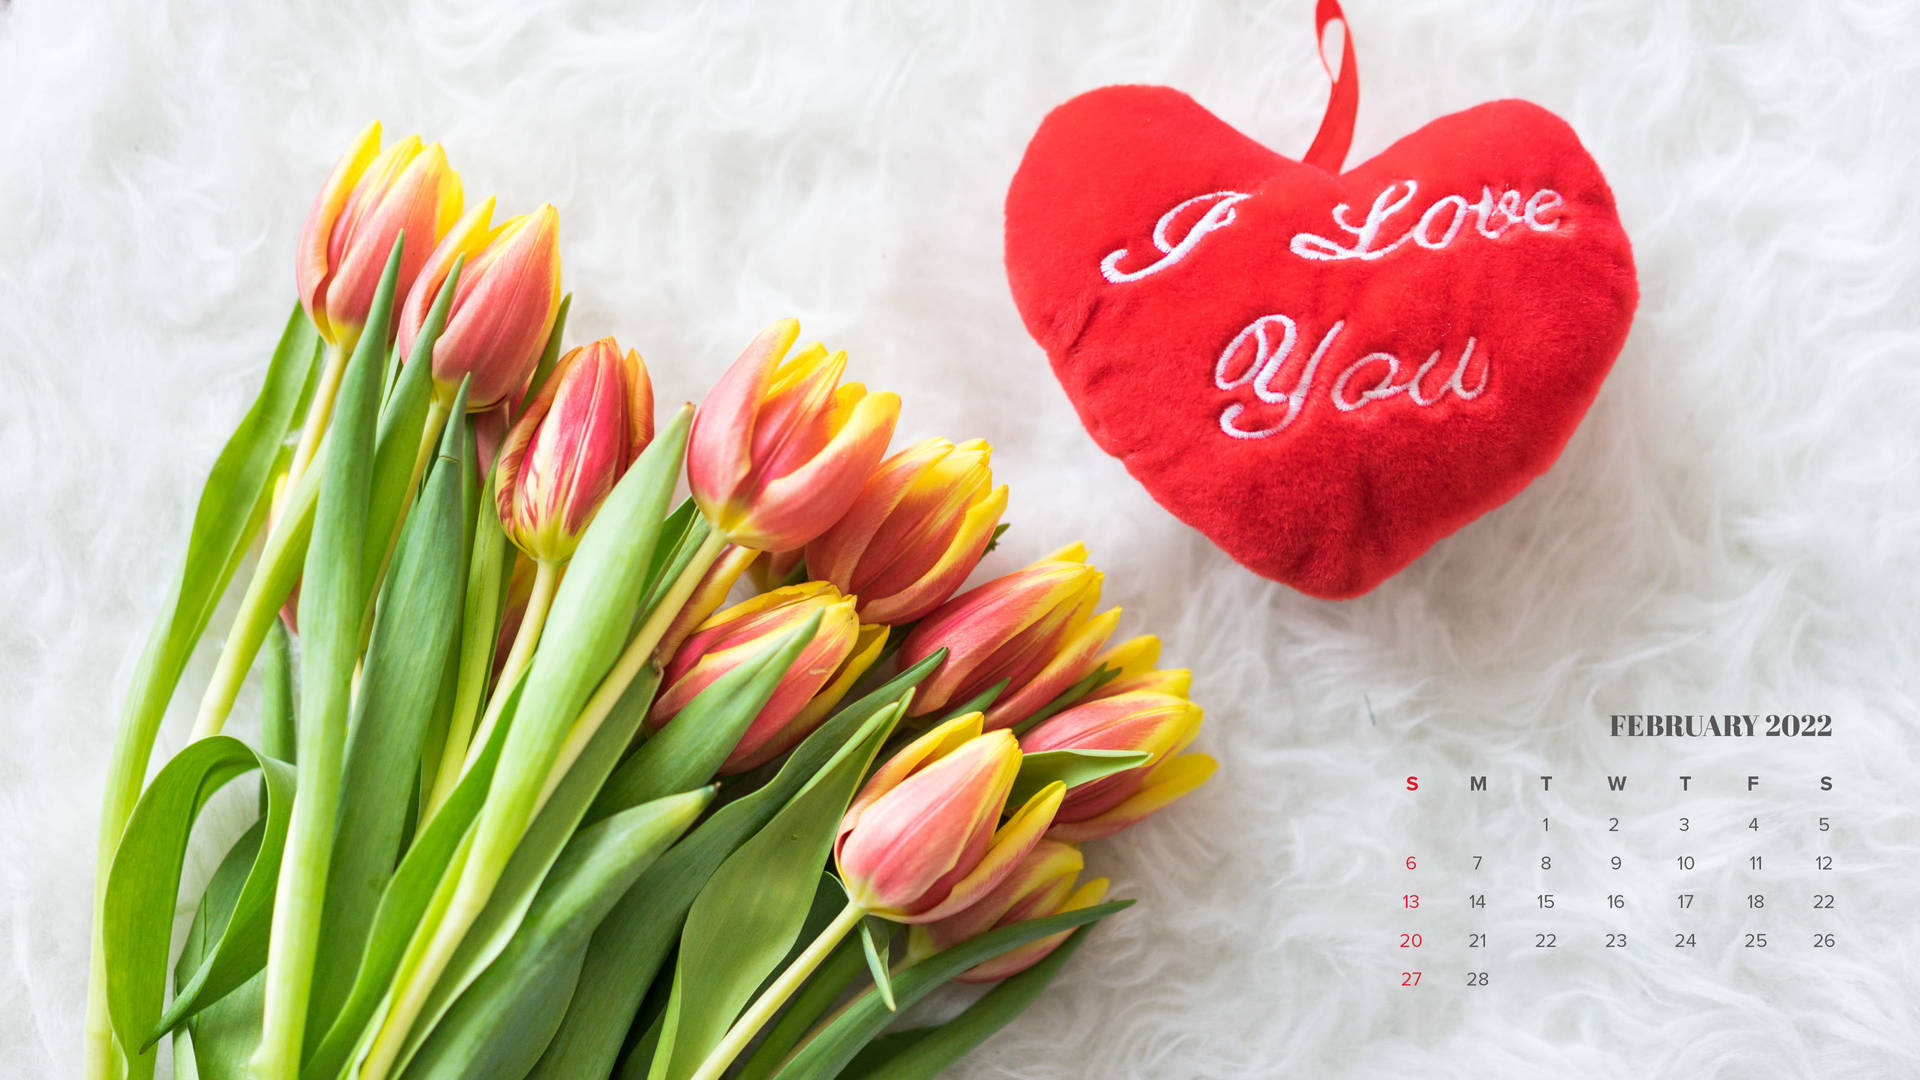 Tulips February 2022 Calendar Wallpaper